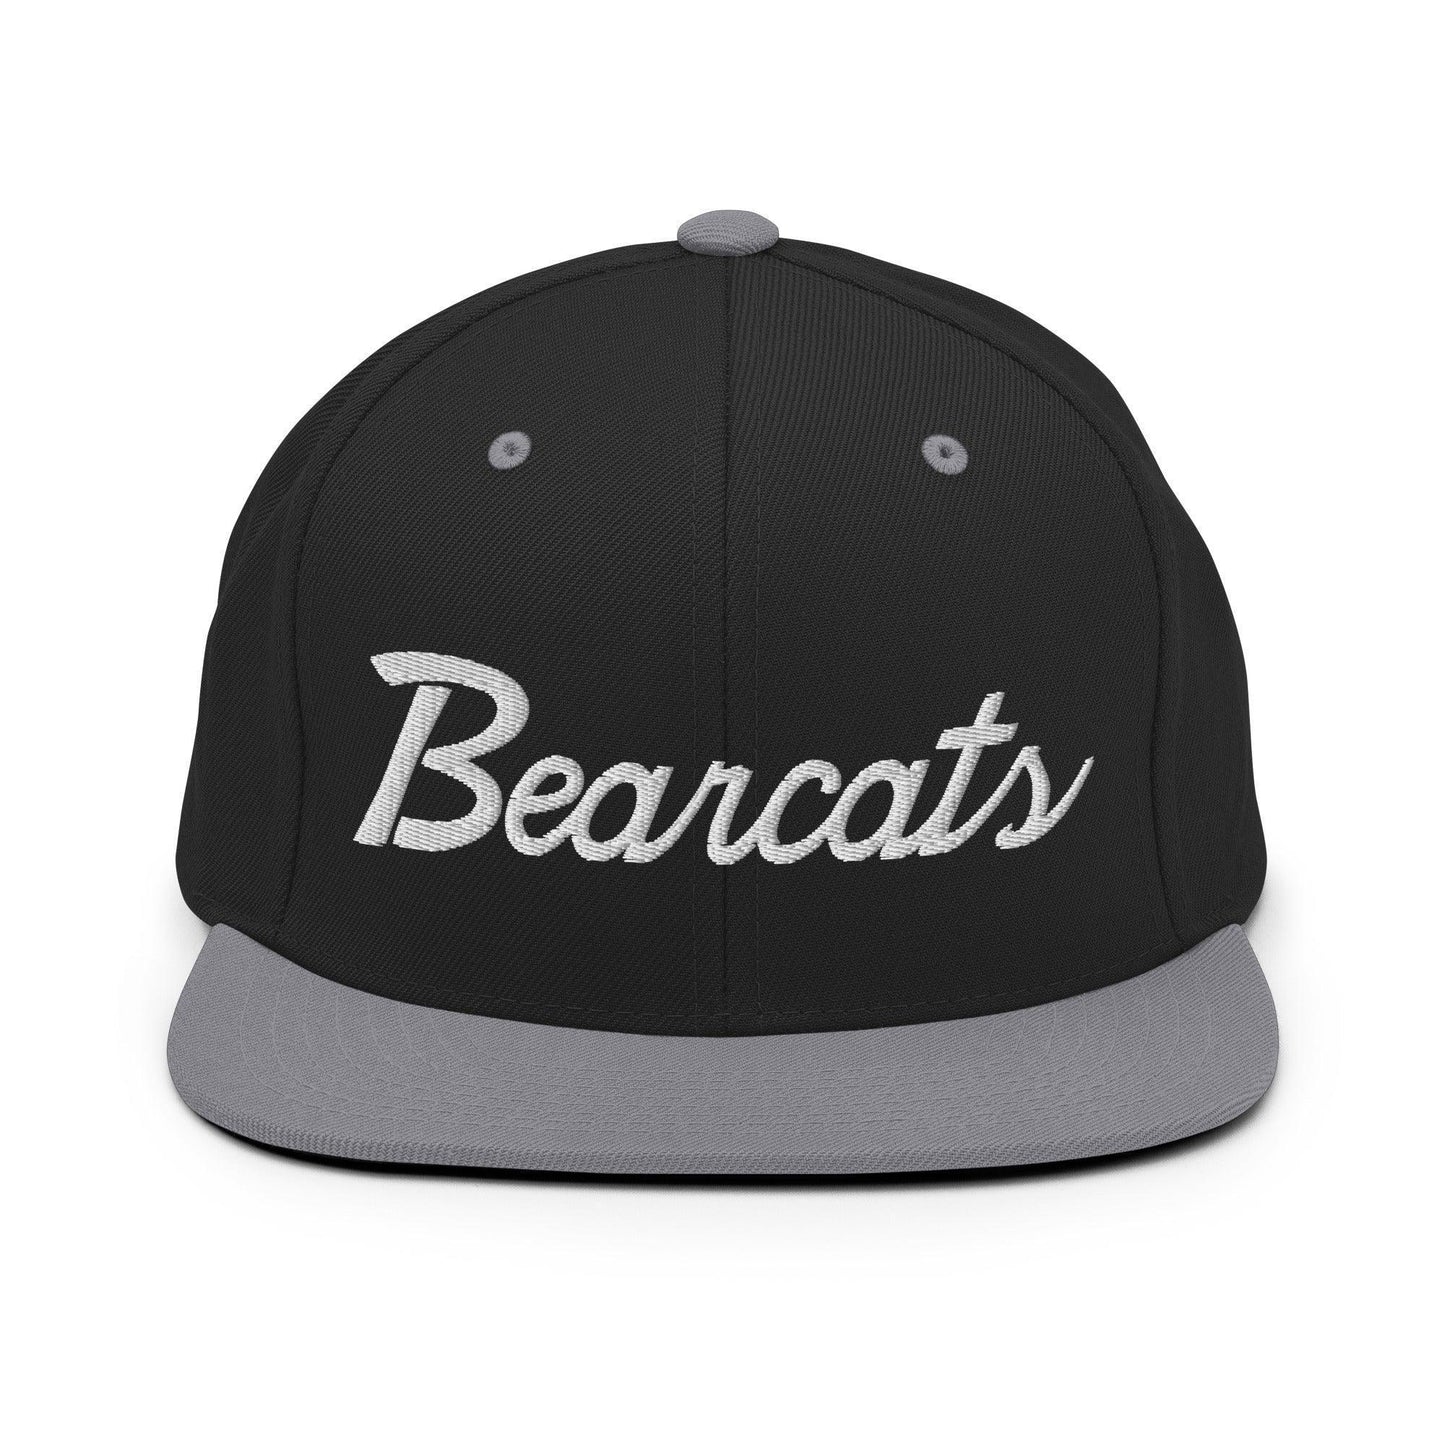 Bearcats School Mascot Script Snapback Hat Black Silver